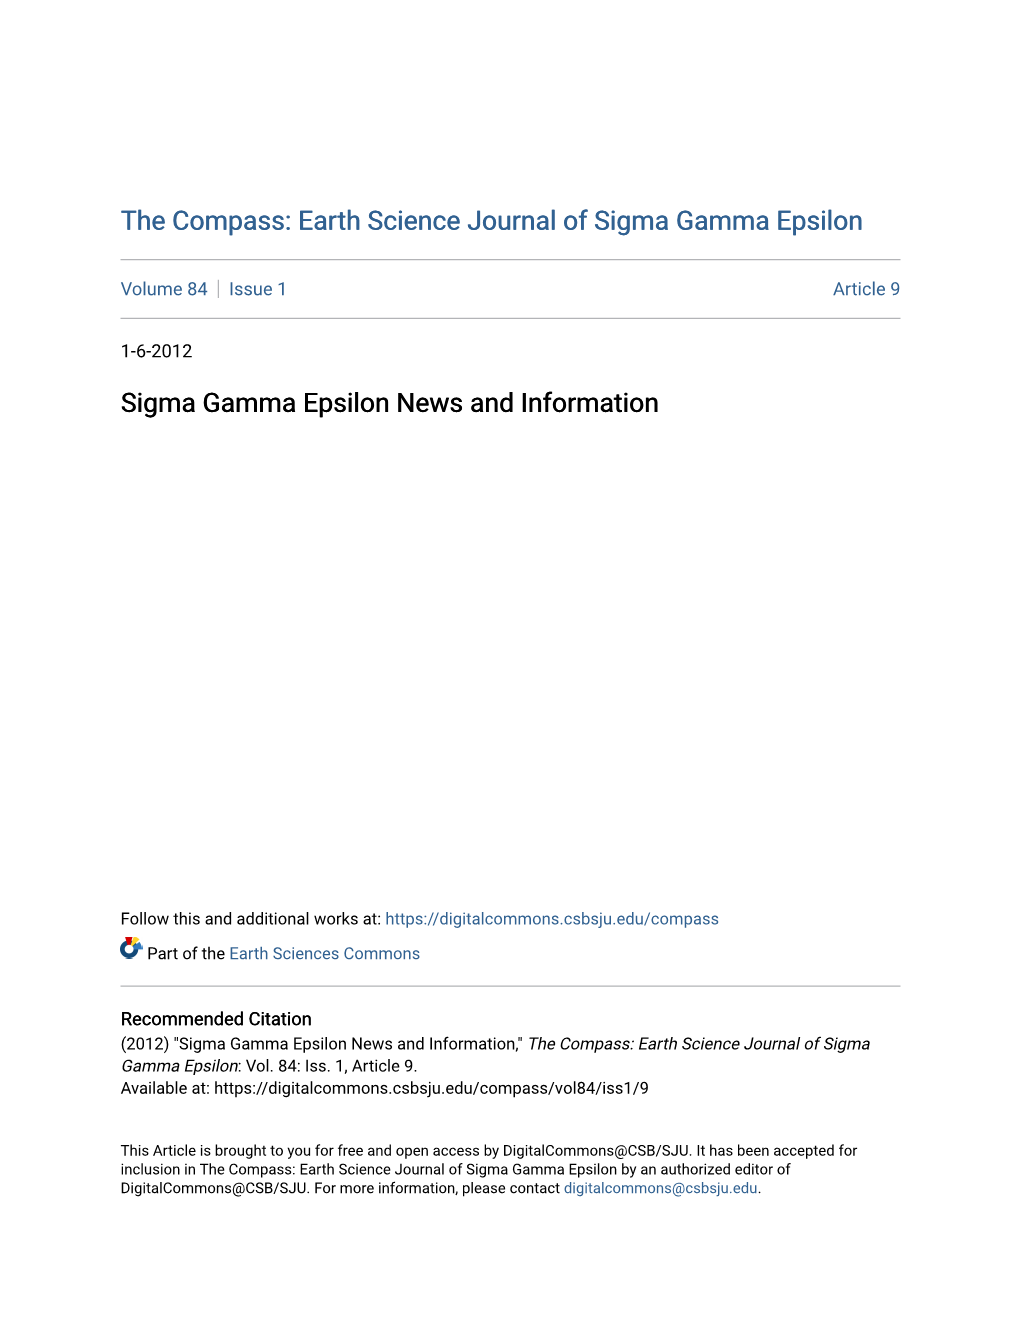 Sigma Gamma Epsilon News and Information